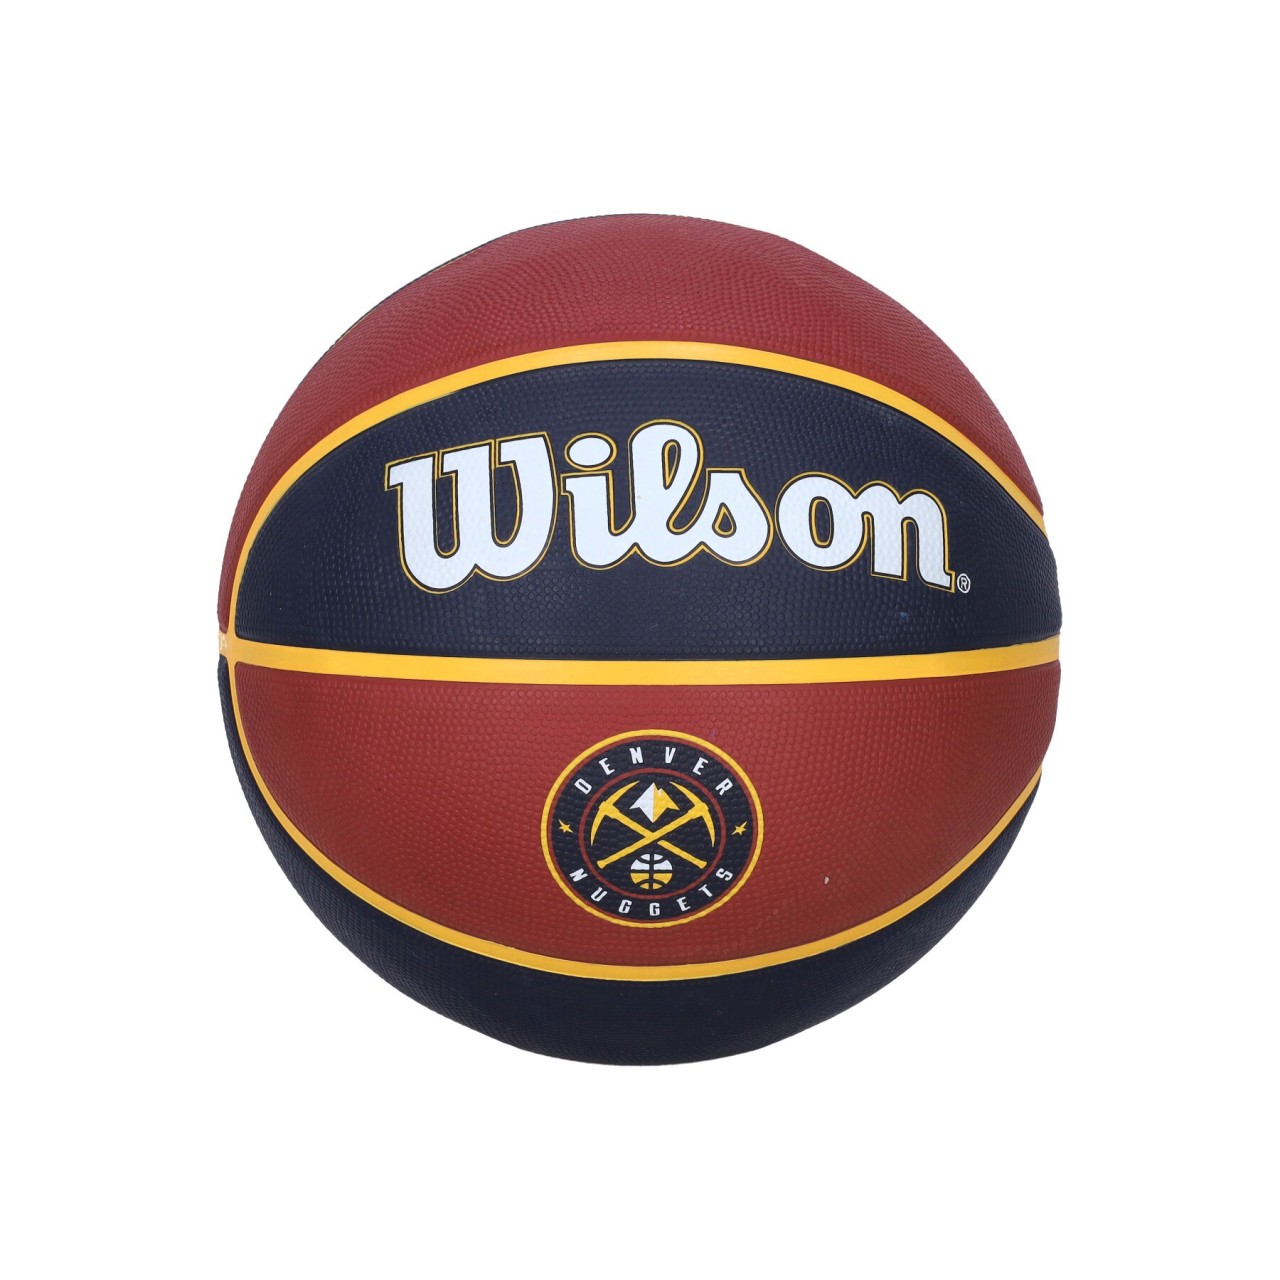 WILSON TEAM NBA TEAM TRIBUTE BASKETBALL SIZE 7 DENNUG WTB1300XBDEN